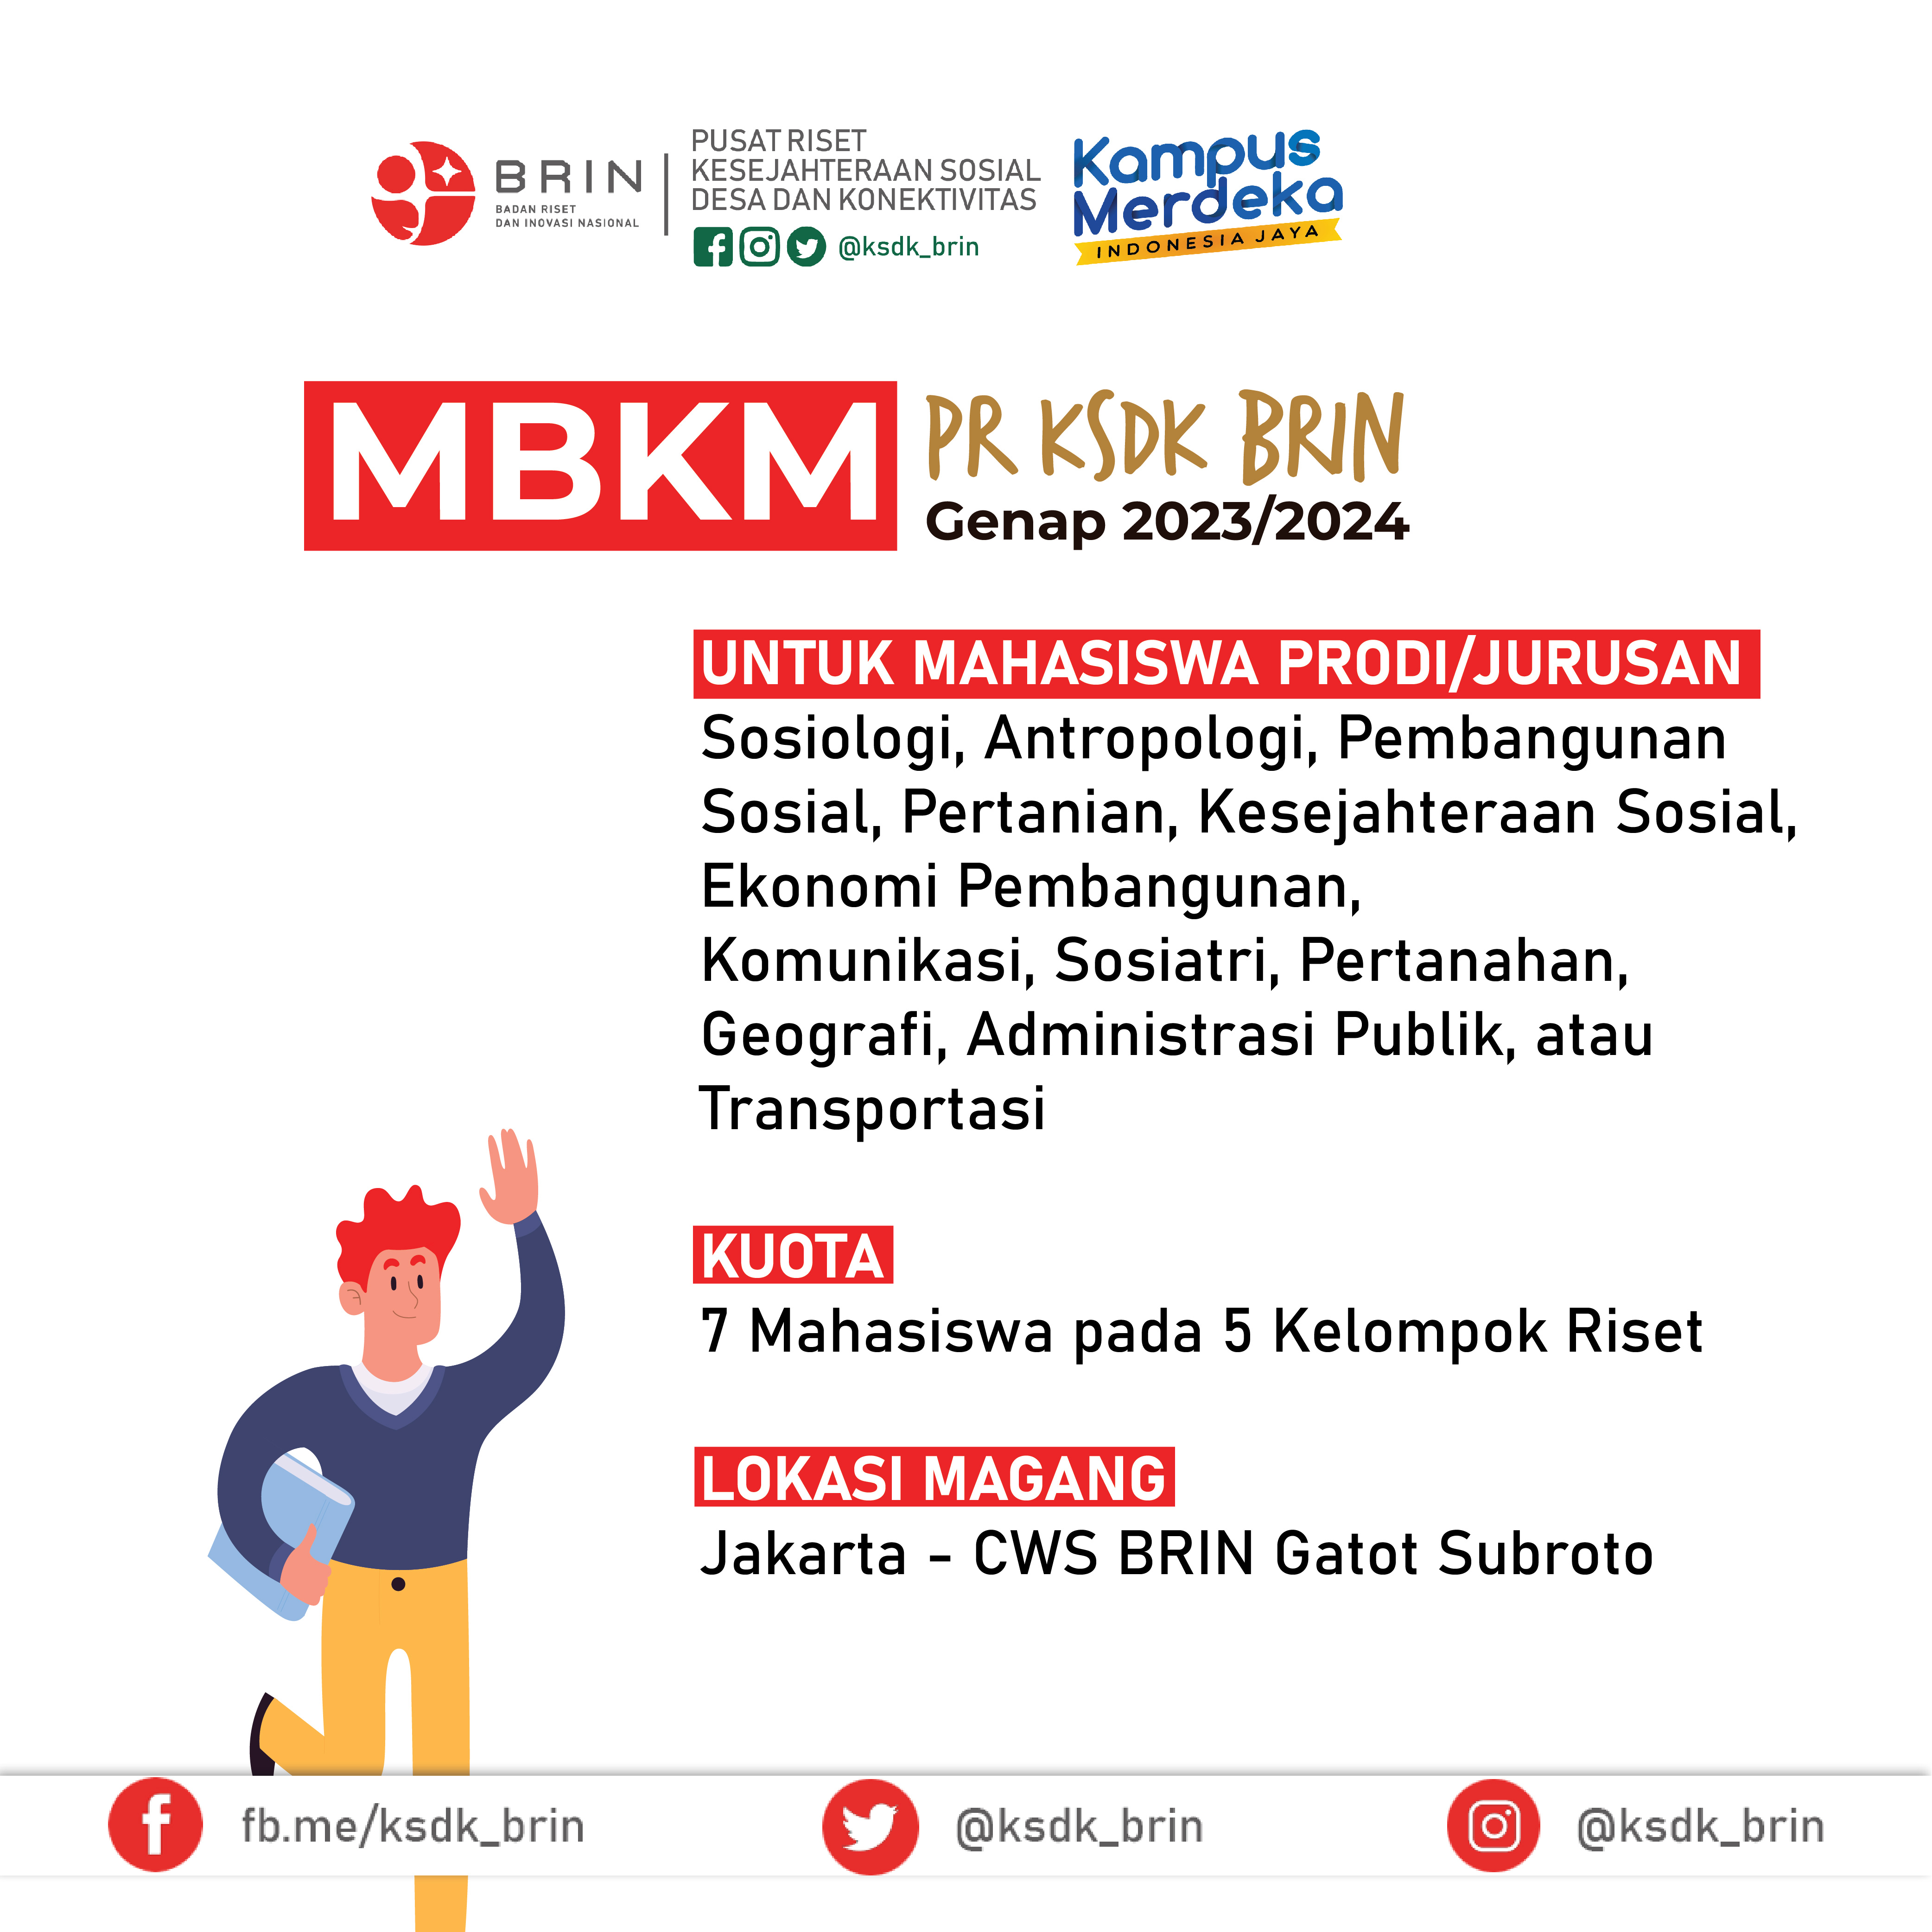 PR KSDK BRIN| Pemberdayaan Masyarakat dan Transformasi Sosial | Magang/Praktek Kerja (Non Riset) - Jakarta (Gatot Subroto) 